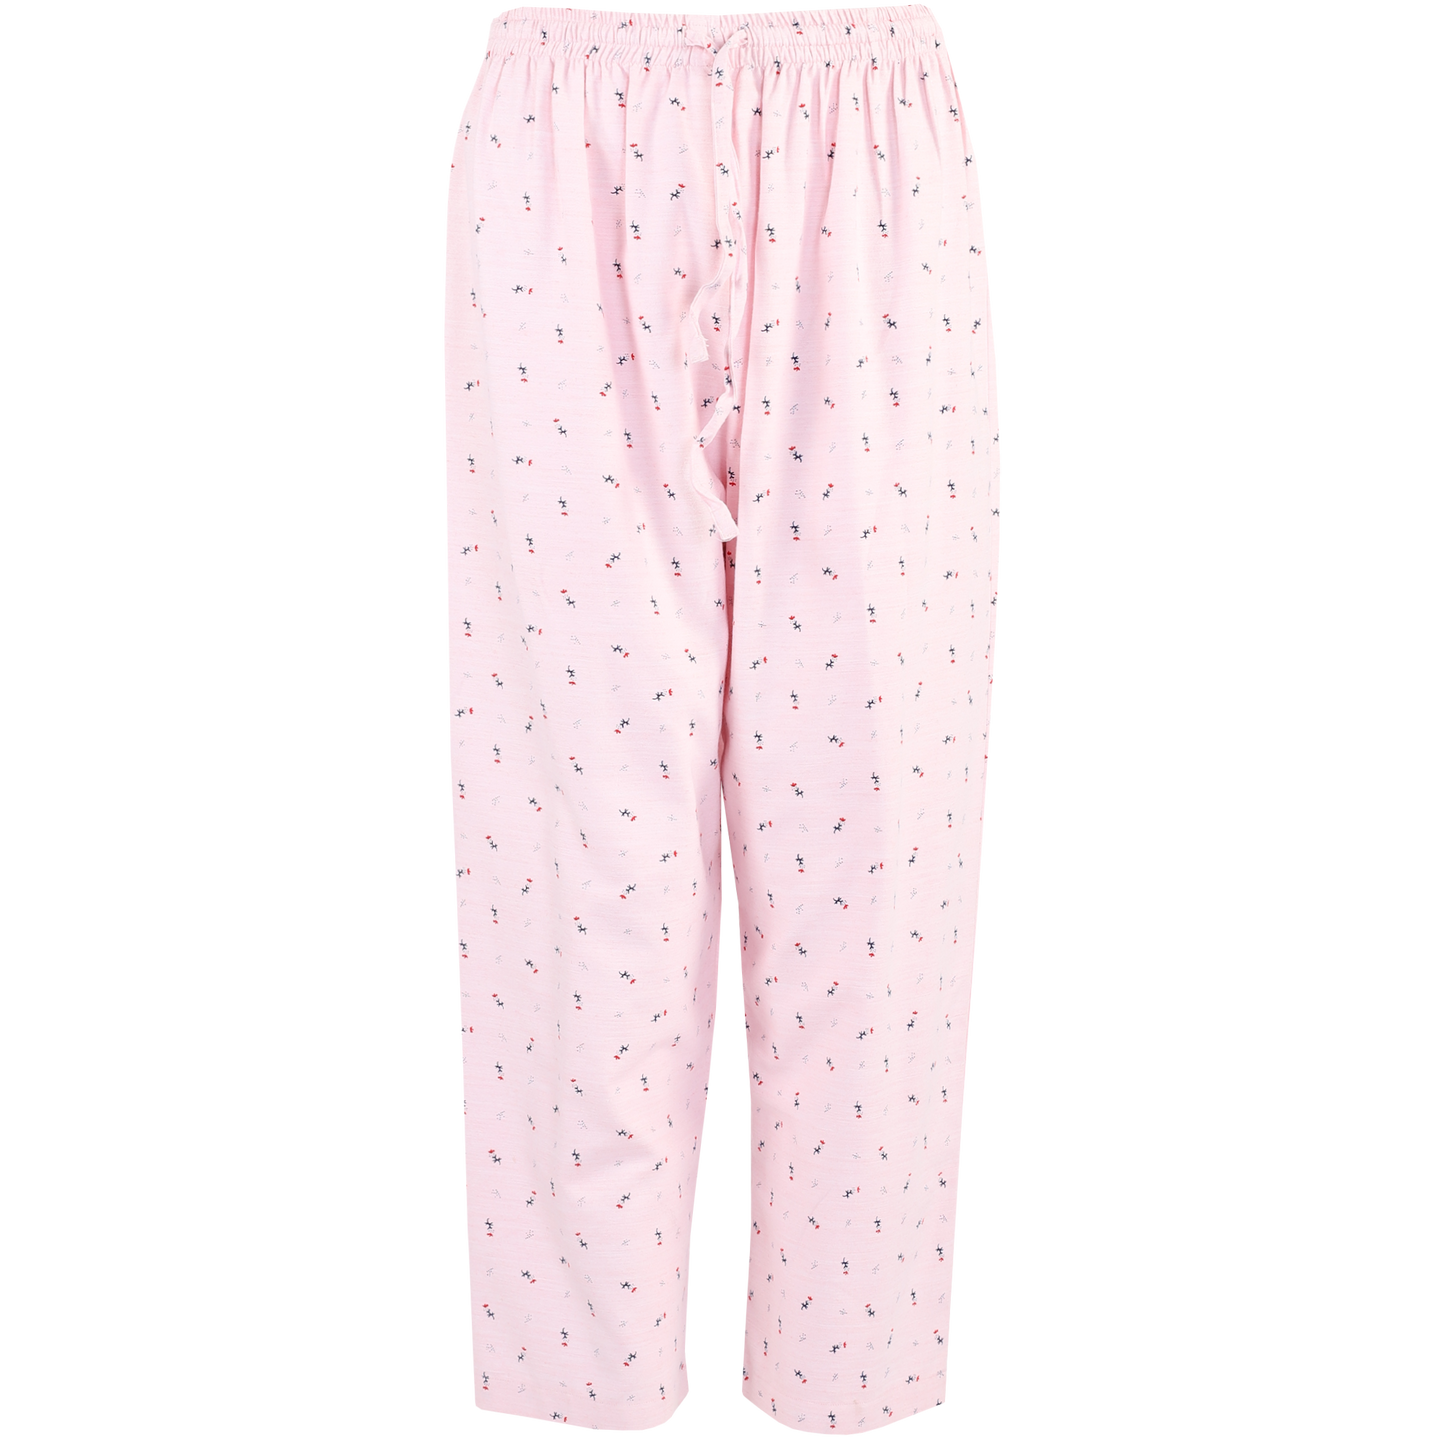 Pink Inpatient Pyjama Pants with Floral Print — Hospital & Nursing Home uniforms by CYC